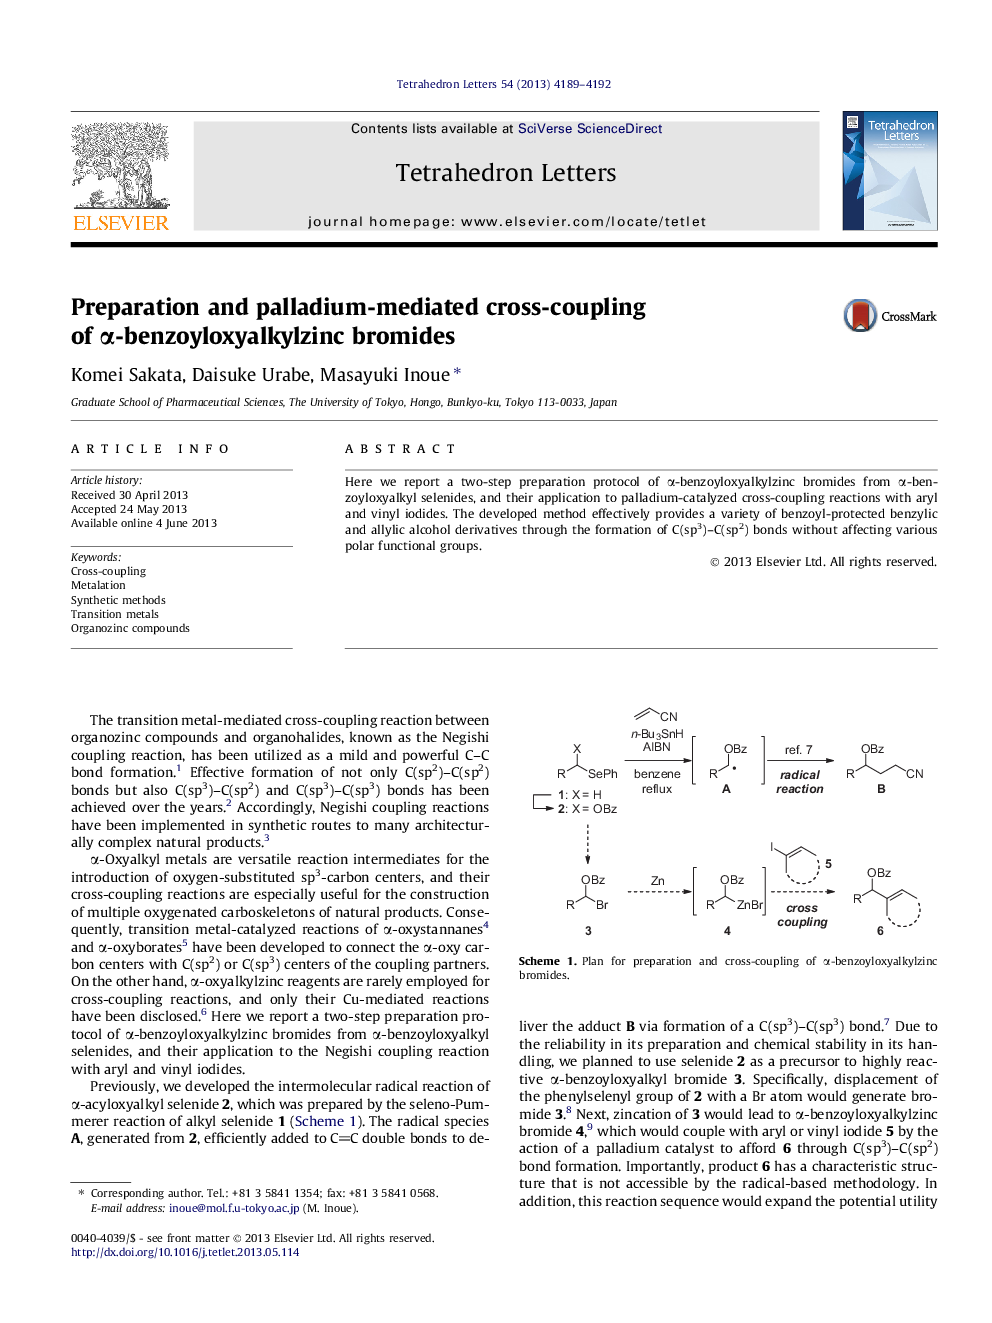 Preparation and palladium-mediated cross-coupling of Î±-benzoyloxyalkylzinc bromides